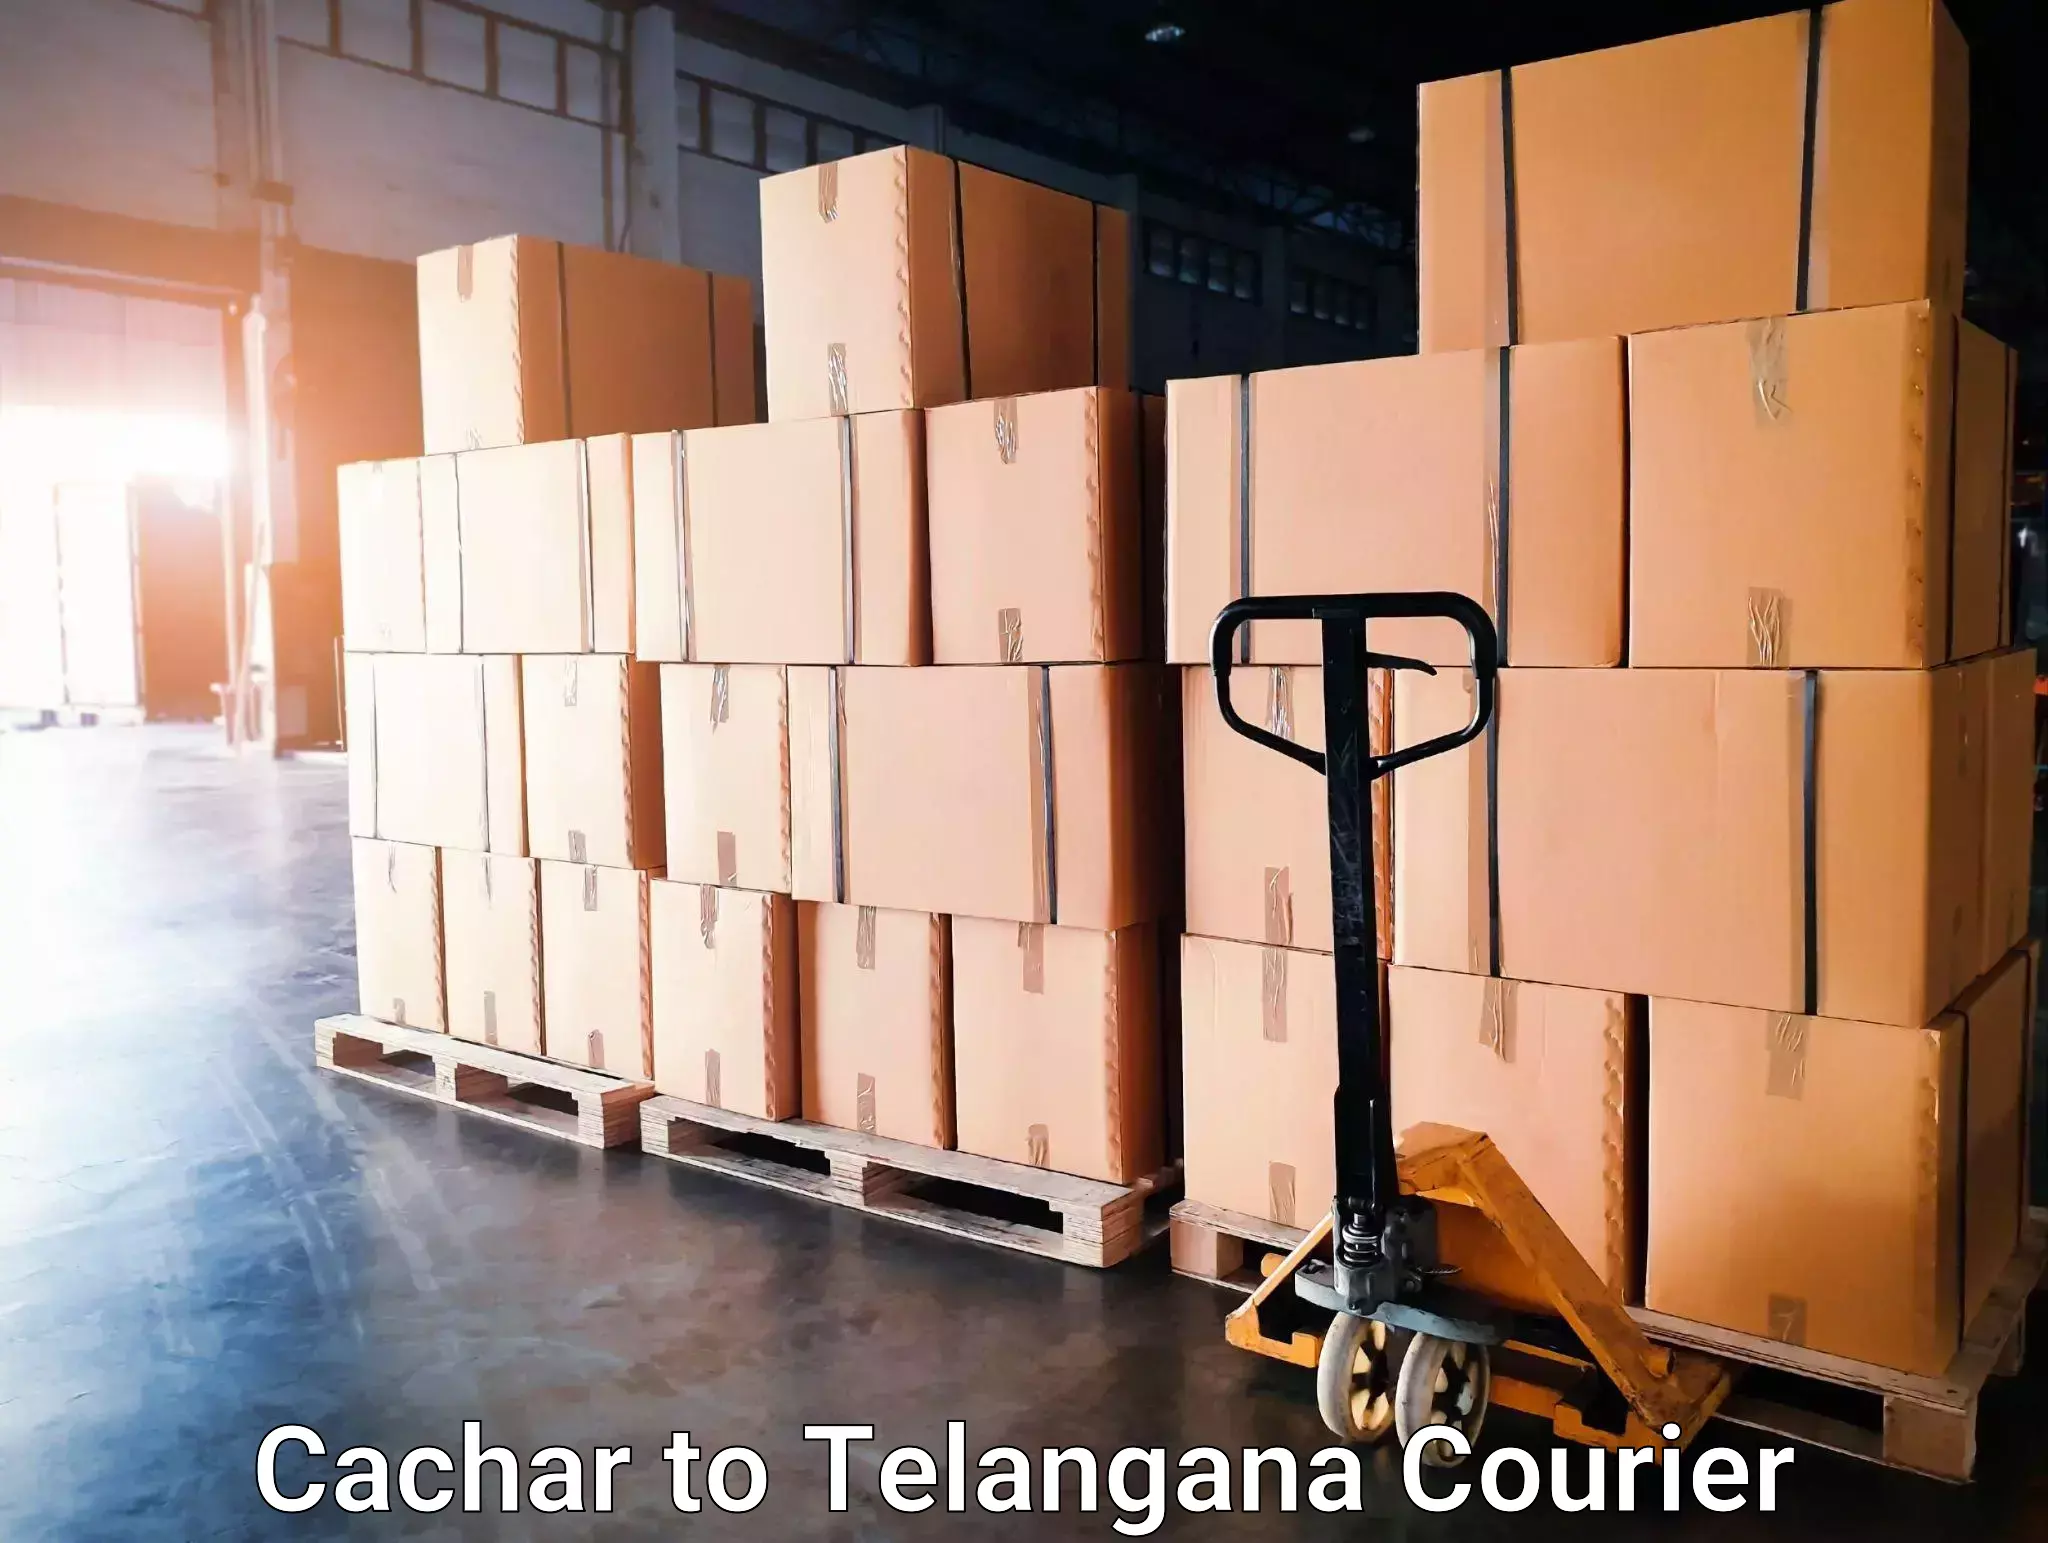 Express delivery capabilities Cachar to Tadoor